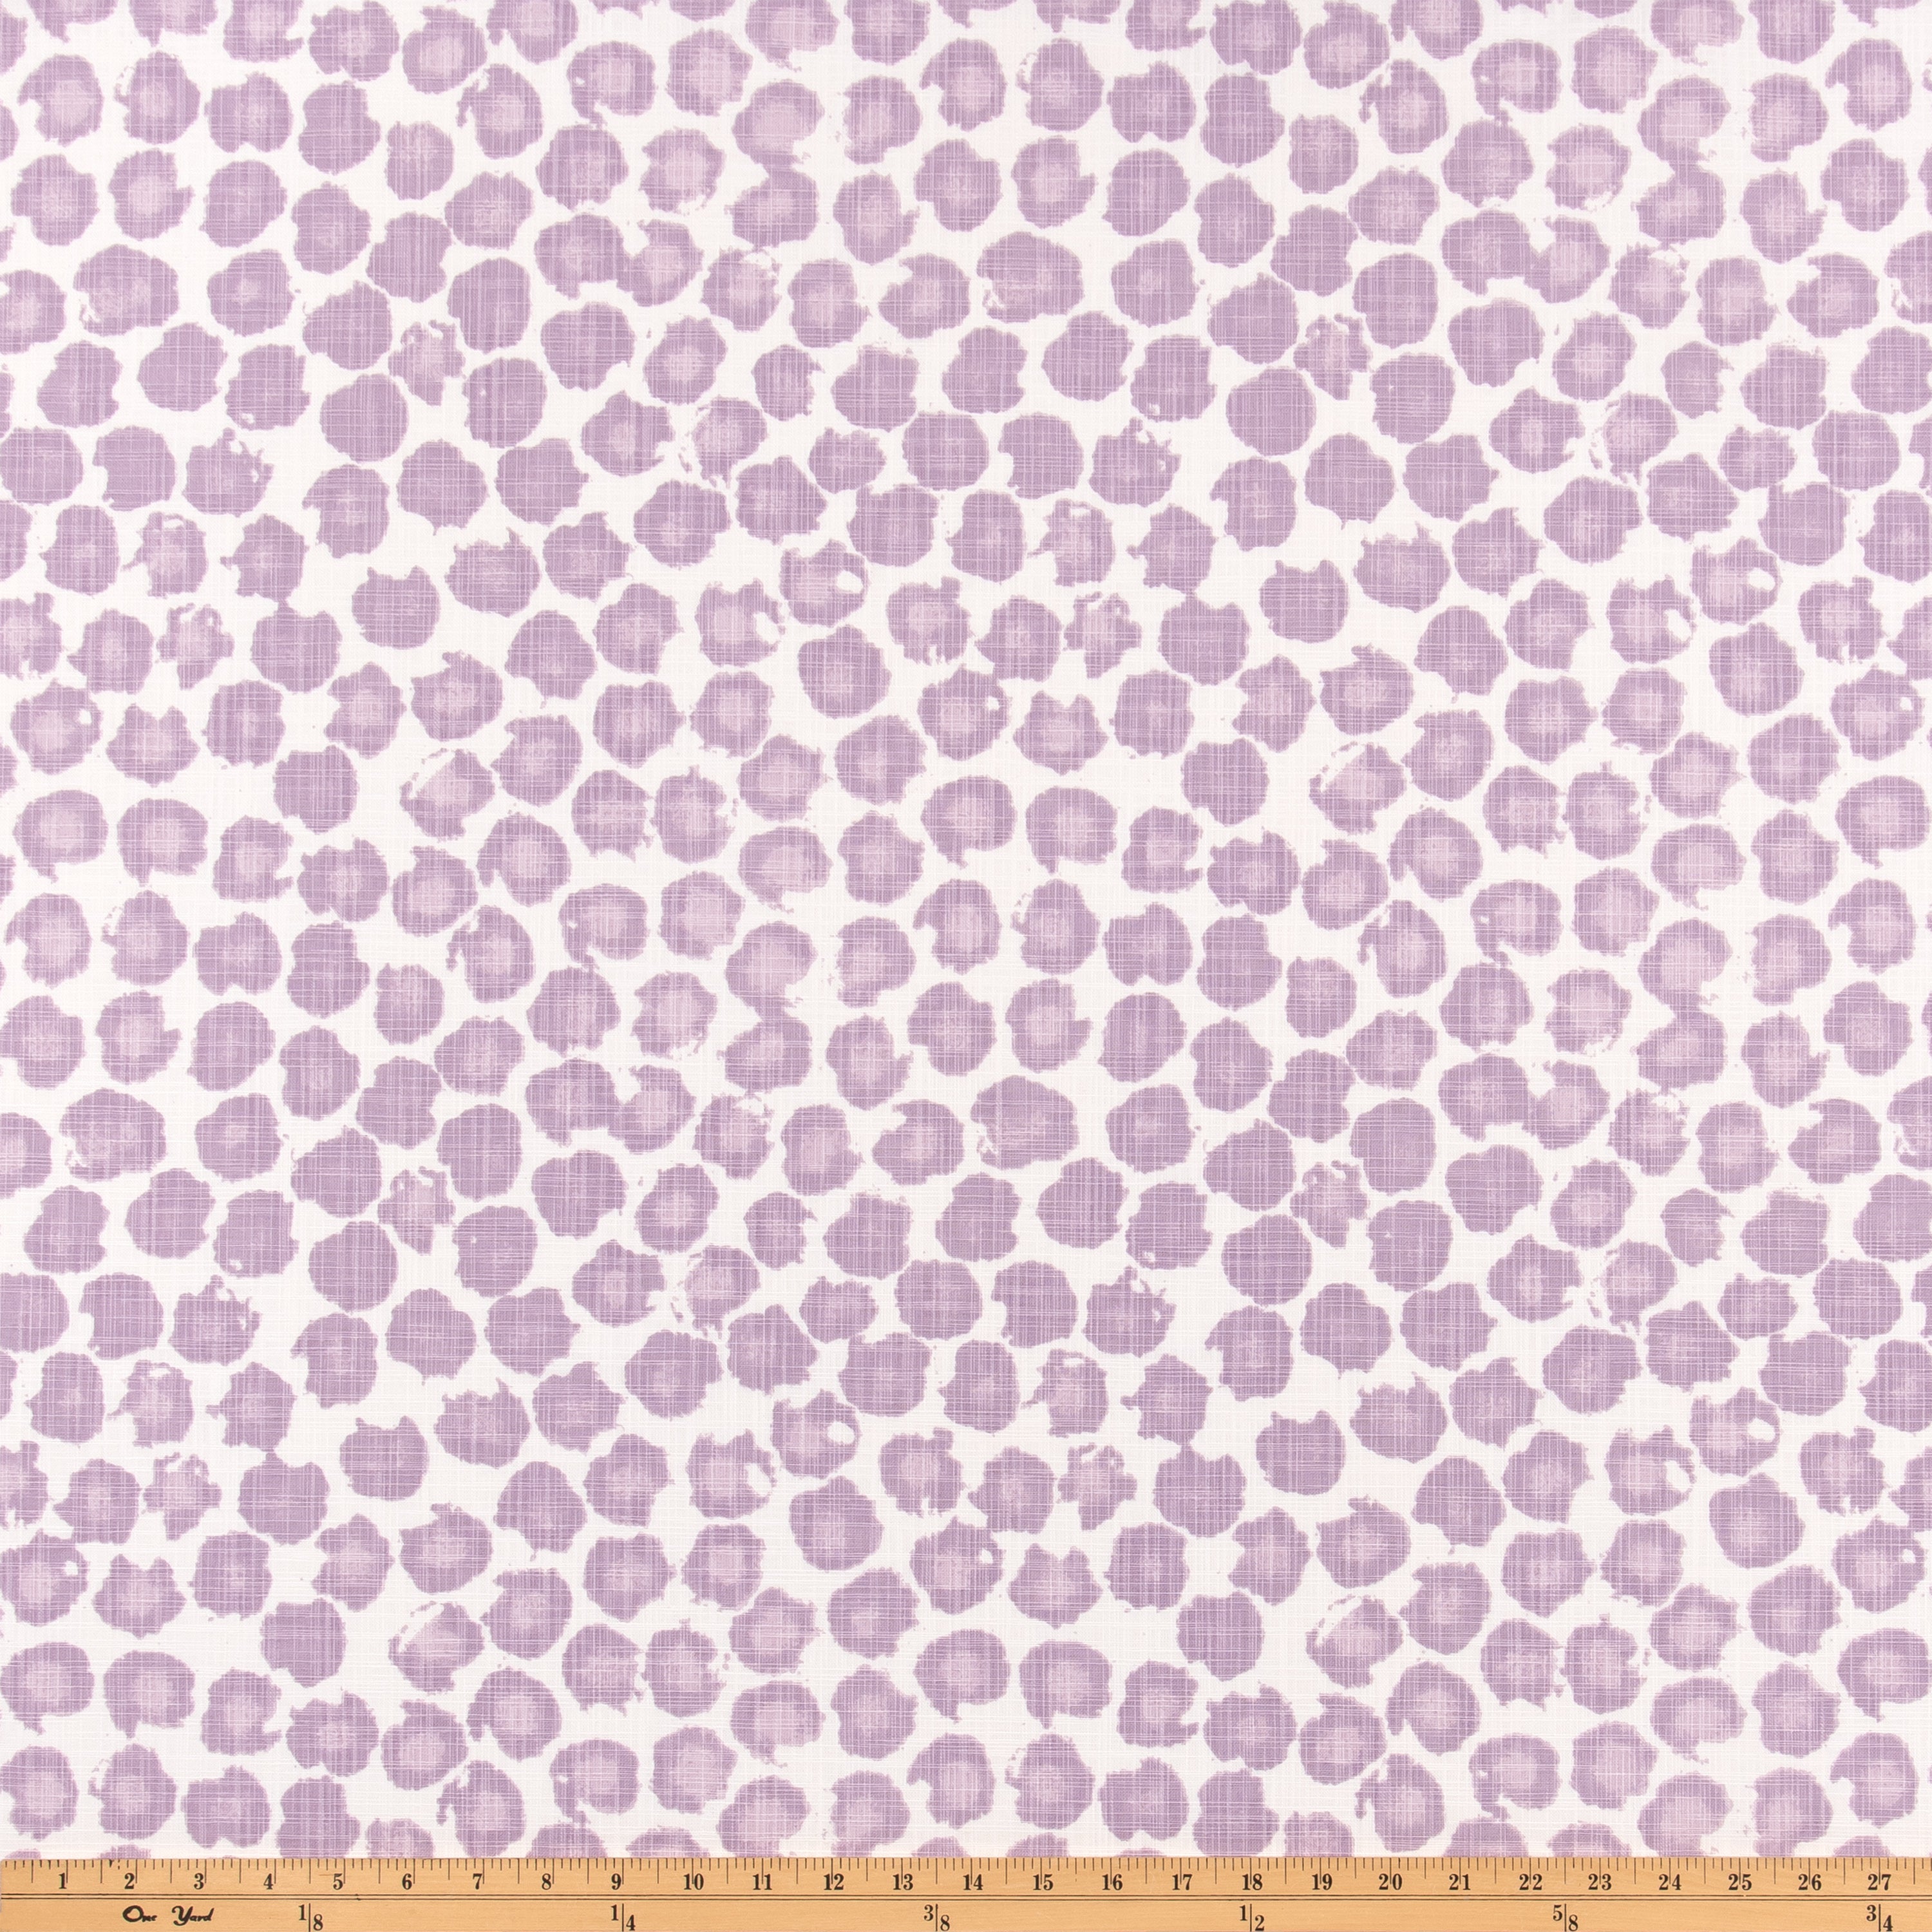 light purple giraffe print